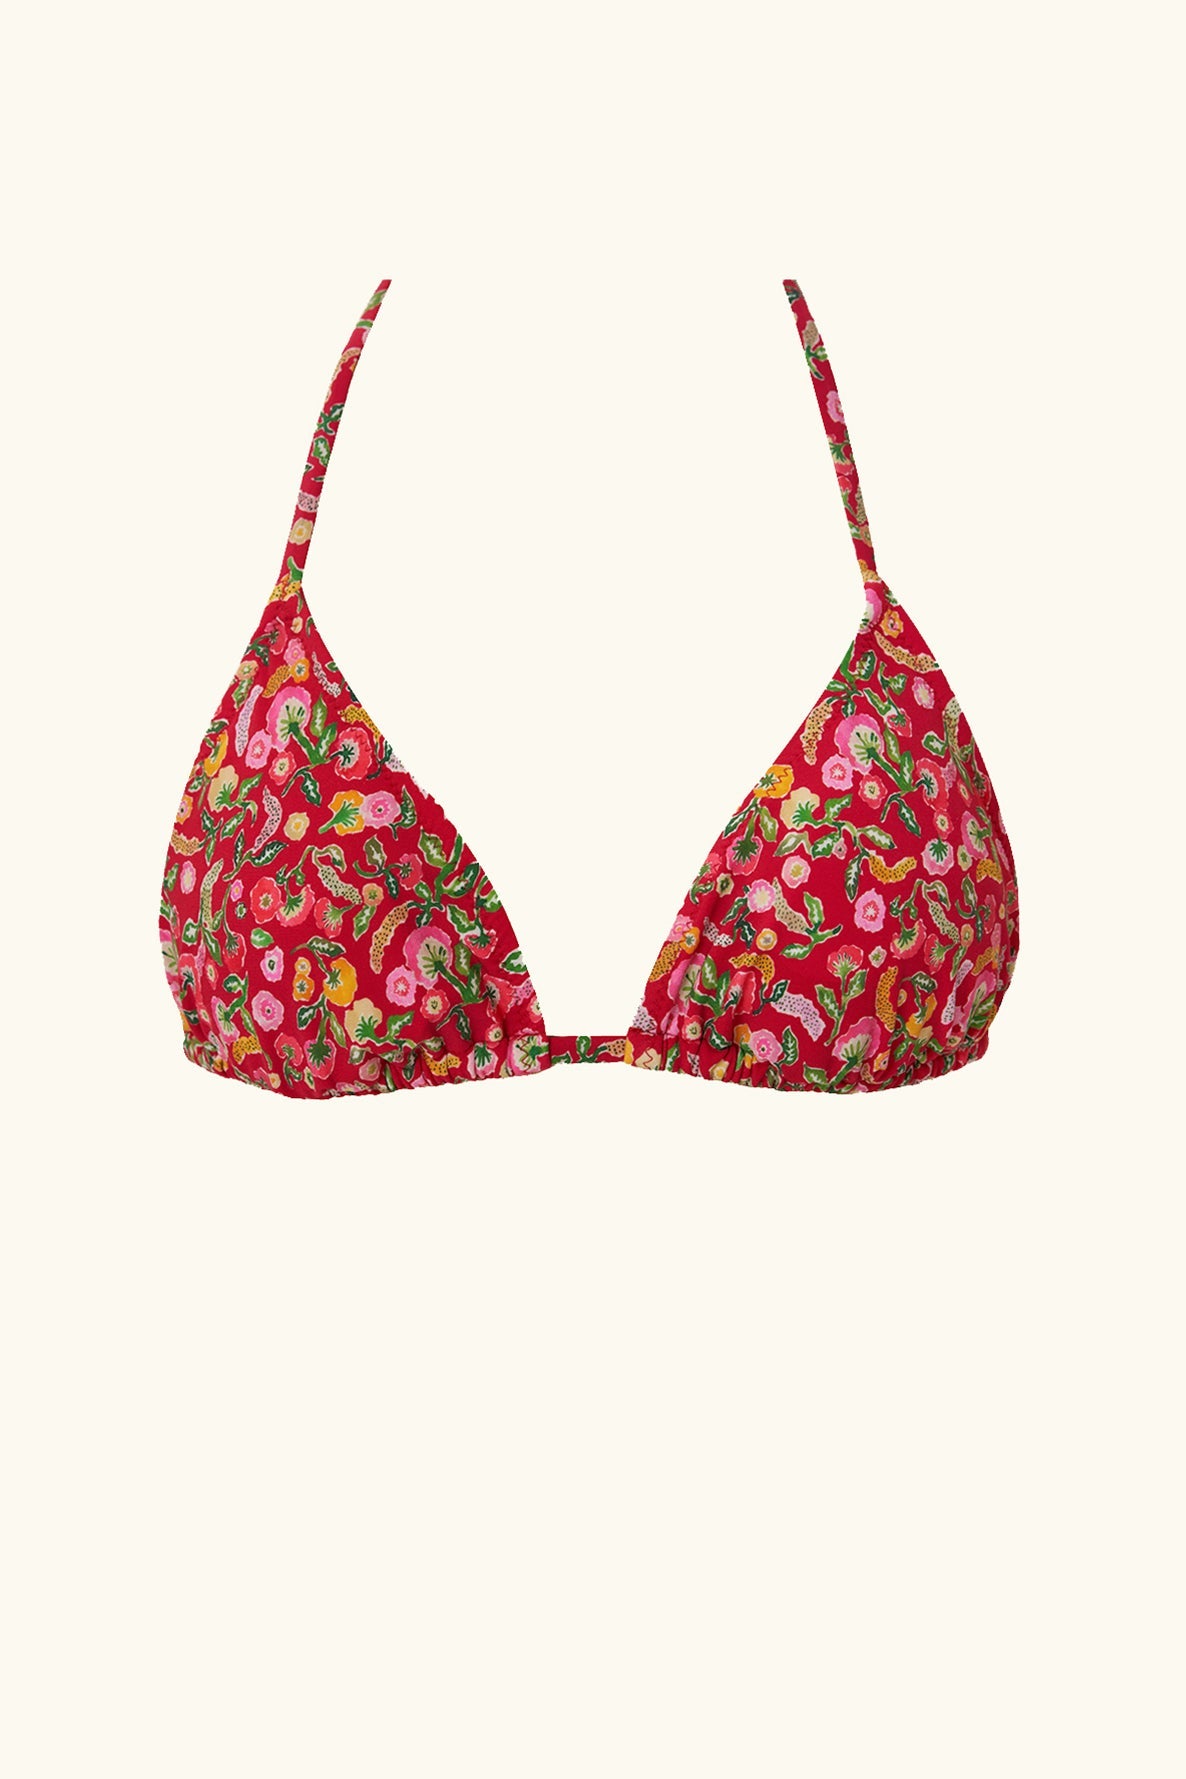 sustainable swimwear brand triangle bikini top in red floral print